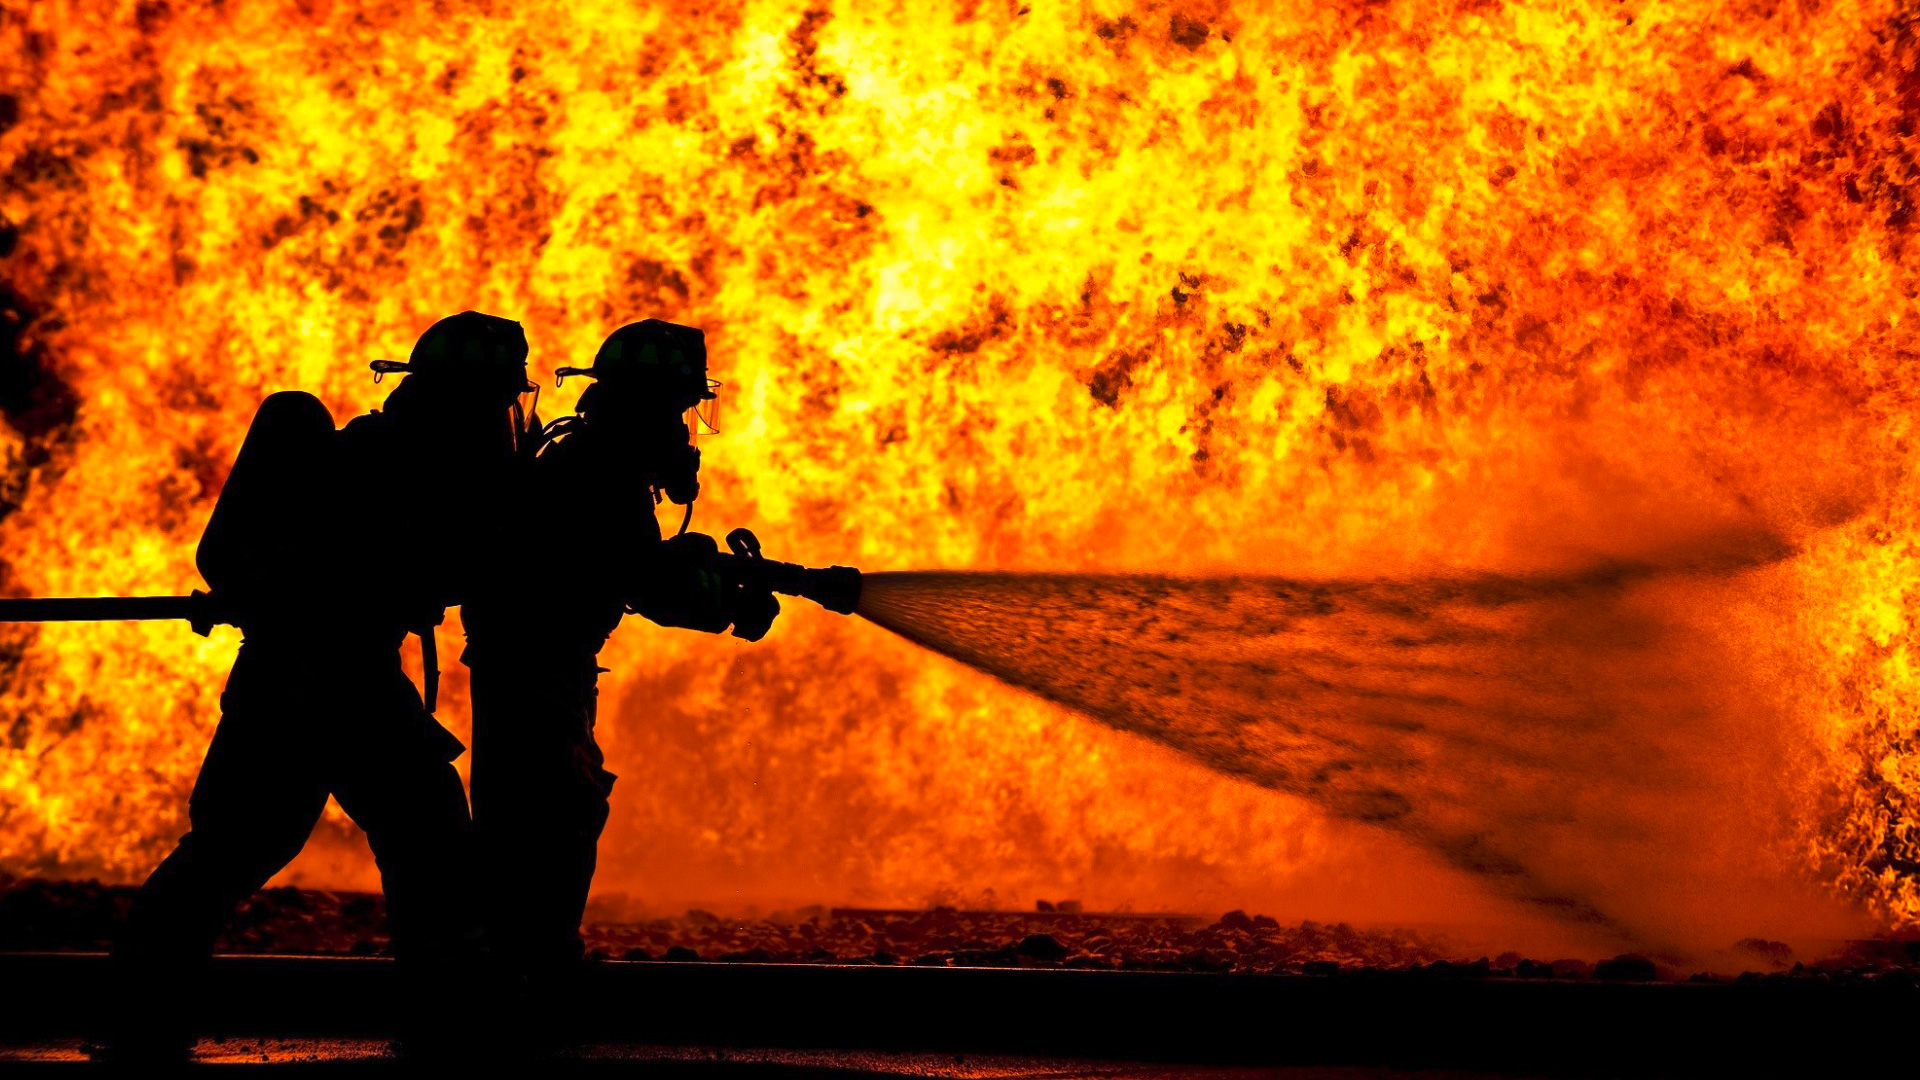 Firemen at work - safety